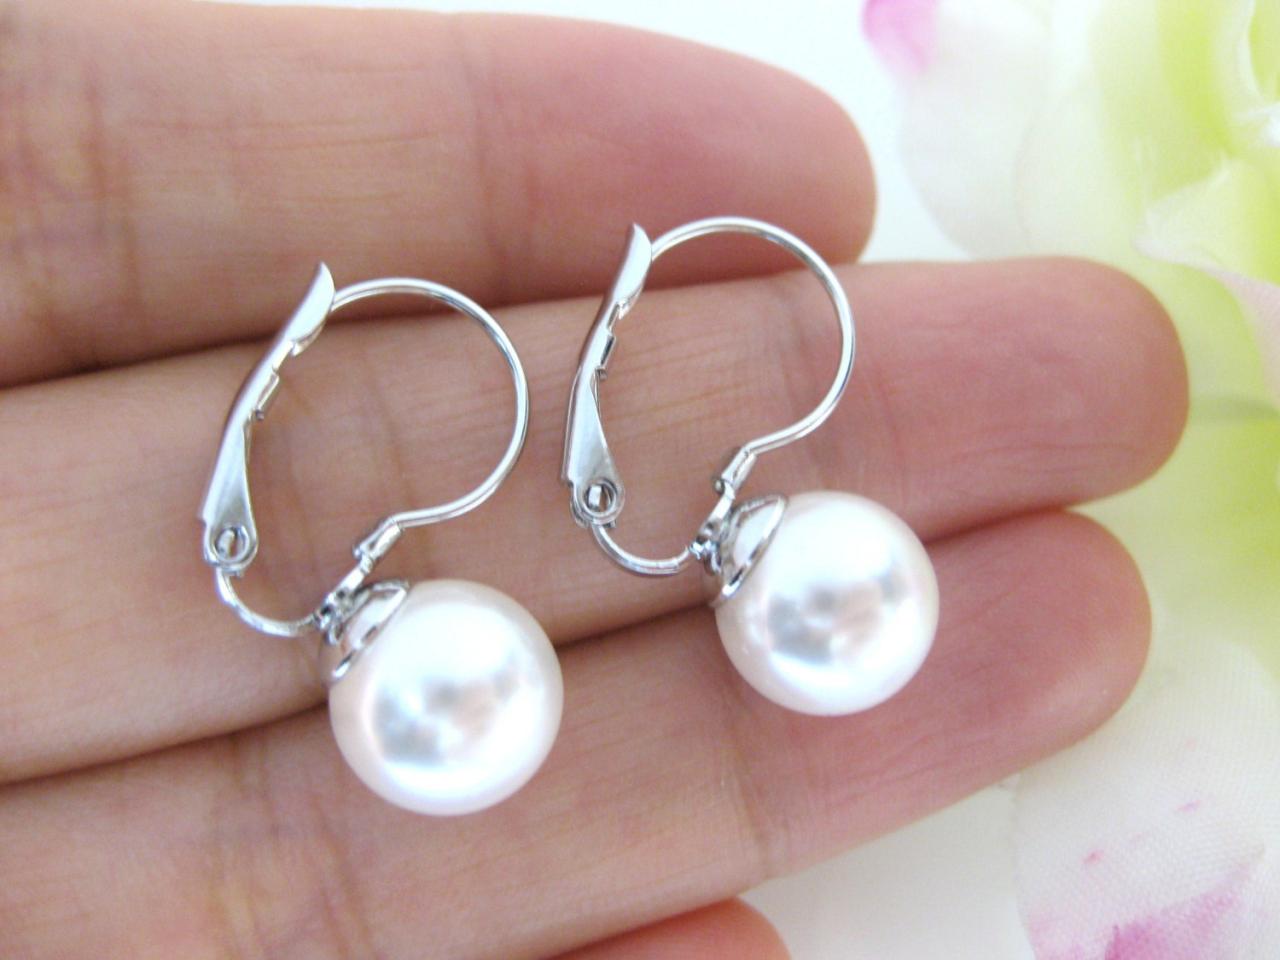 Swarovski Round 8mm Or 10mm Pearl Earrings Leverback Earrings Drop Earrings Wedding Jewelry Bridesmaid Gift Bridal Earrings (e118)